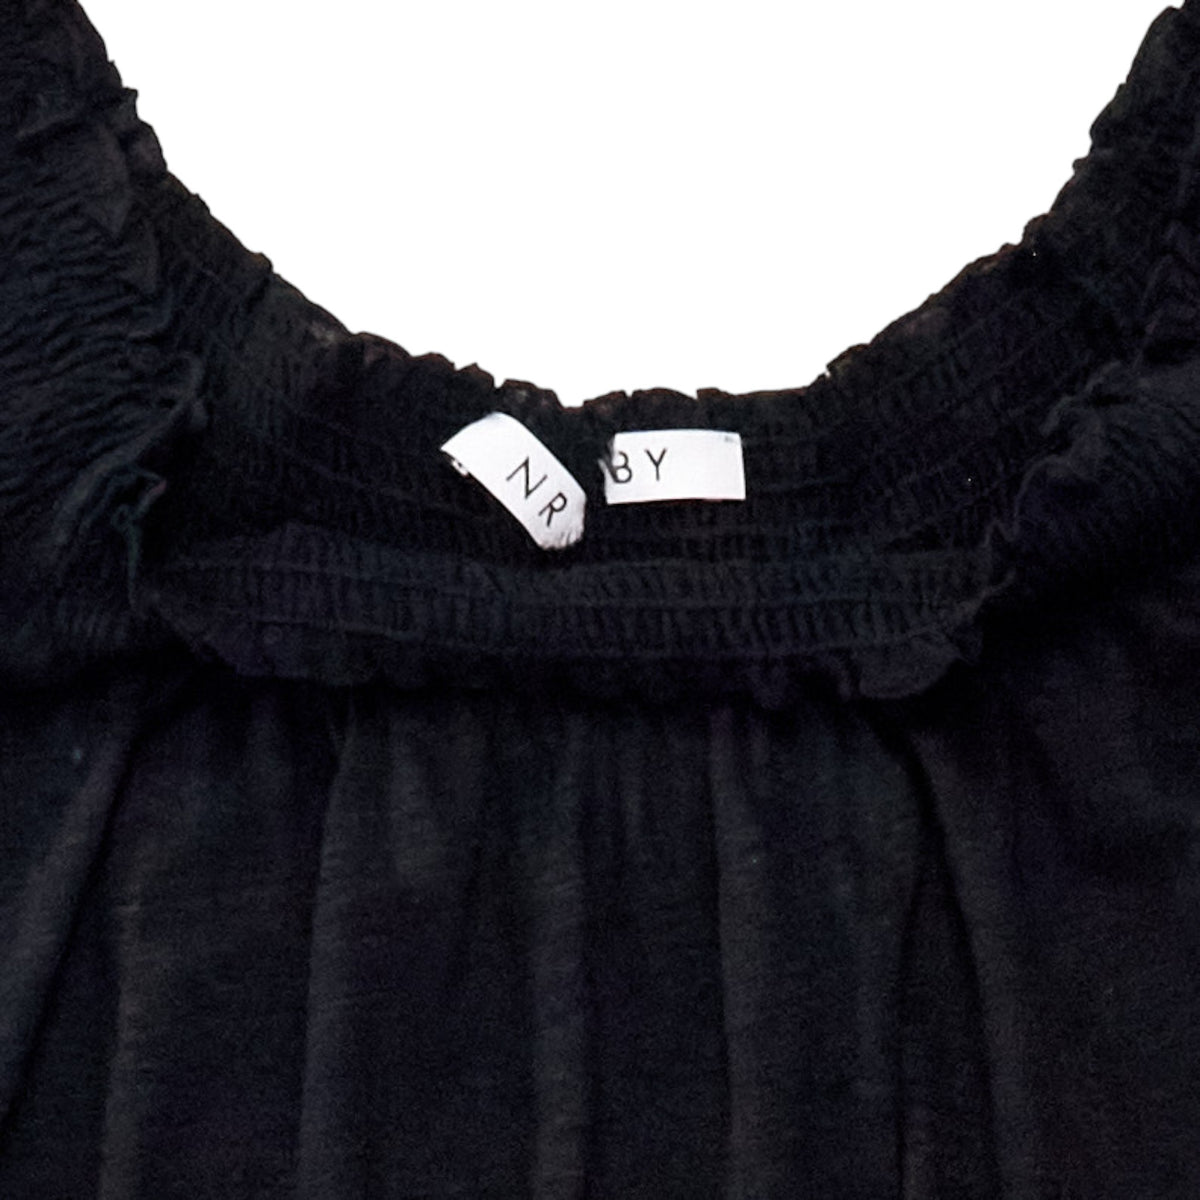 NRBY Black Slub Jersey Dress